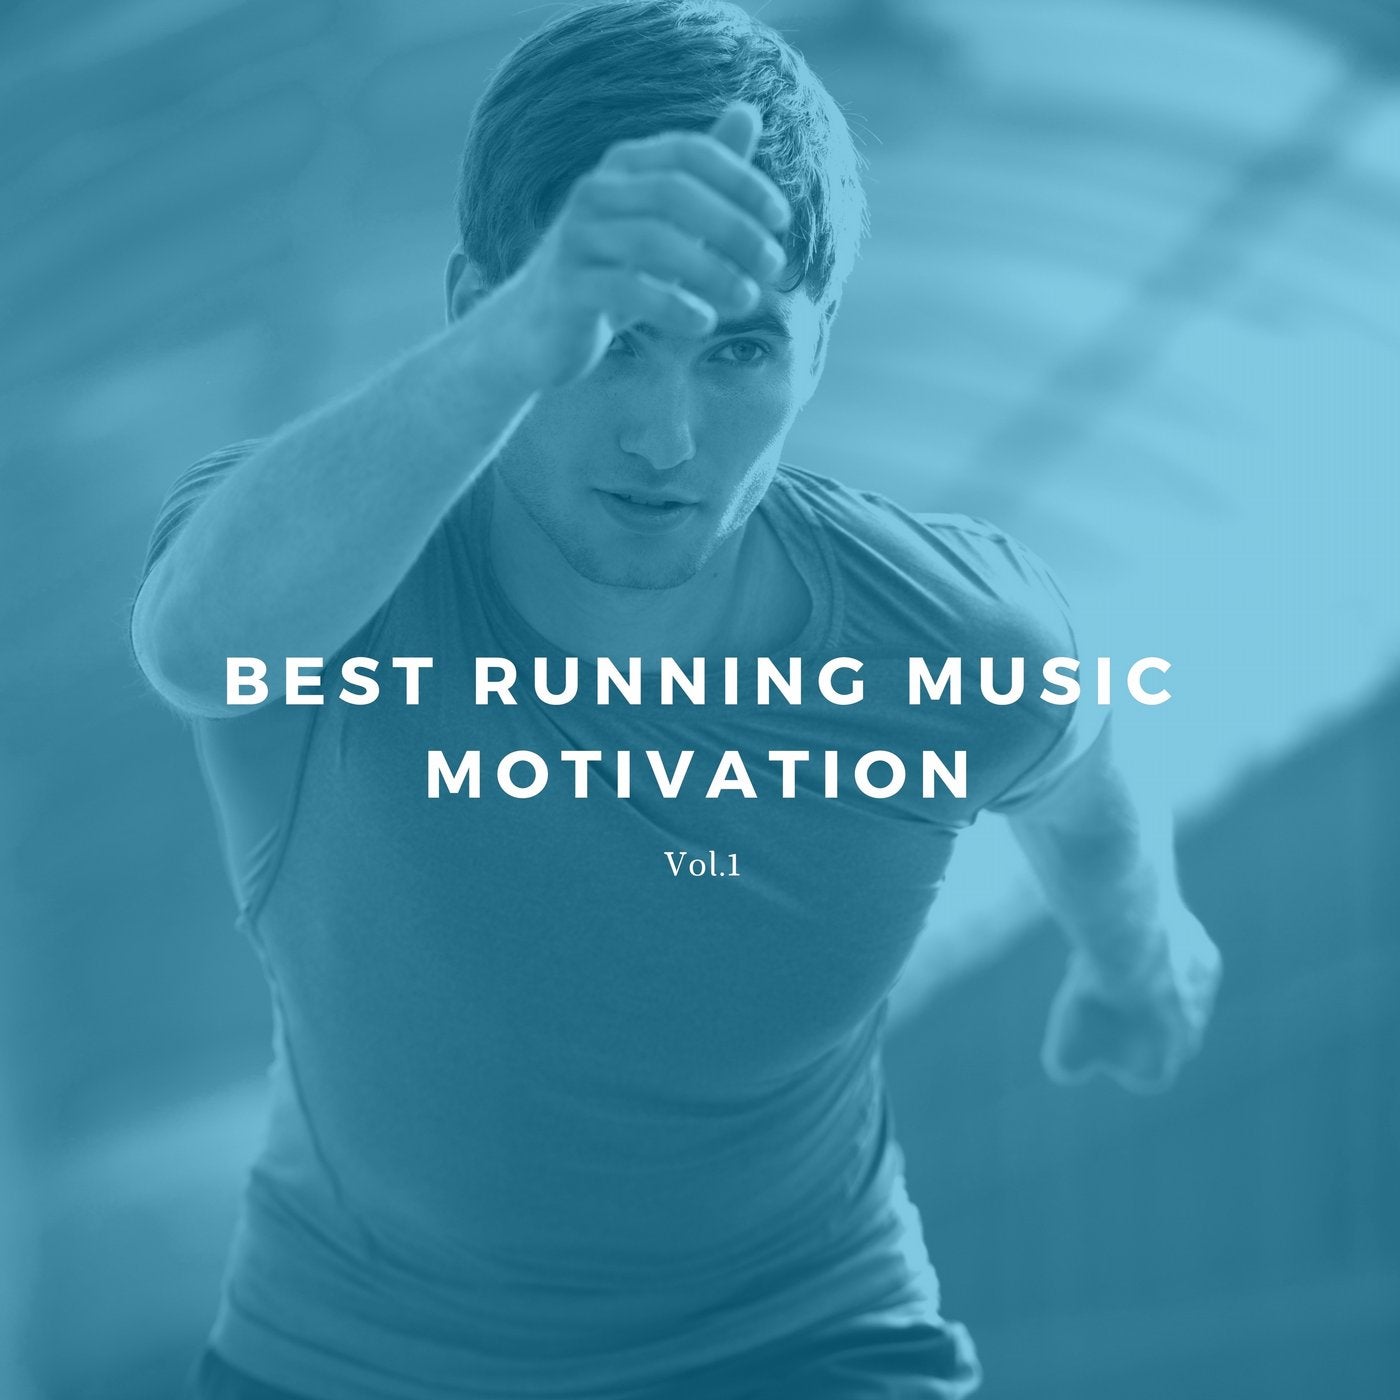 Best Running Music Motivation Vol.1